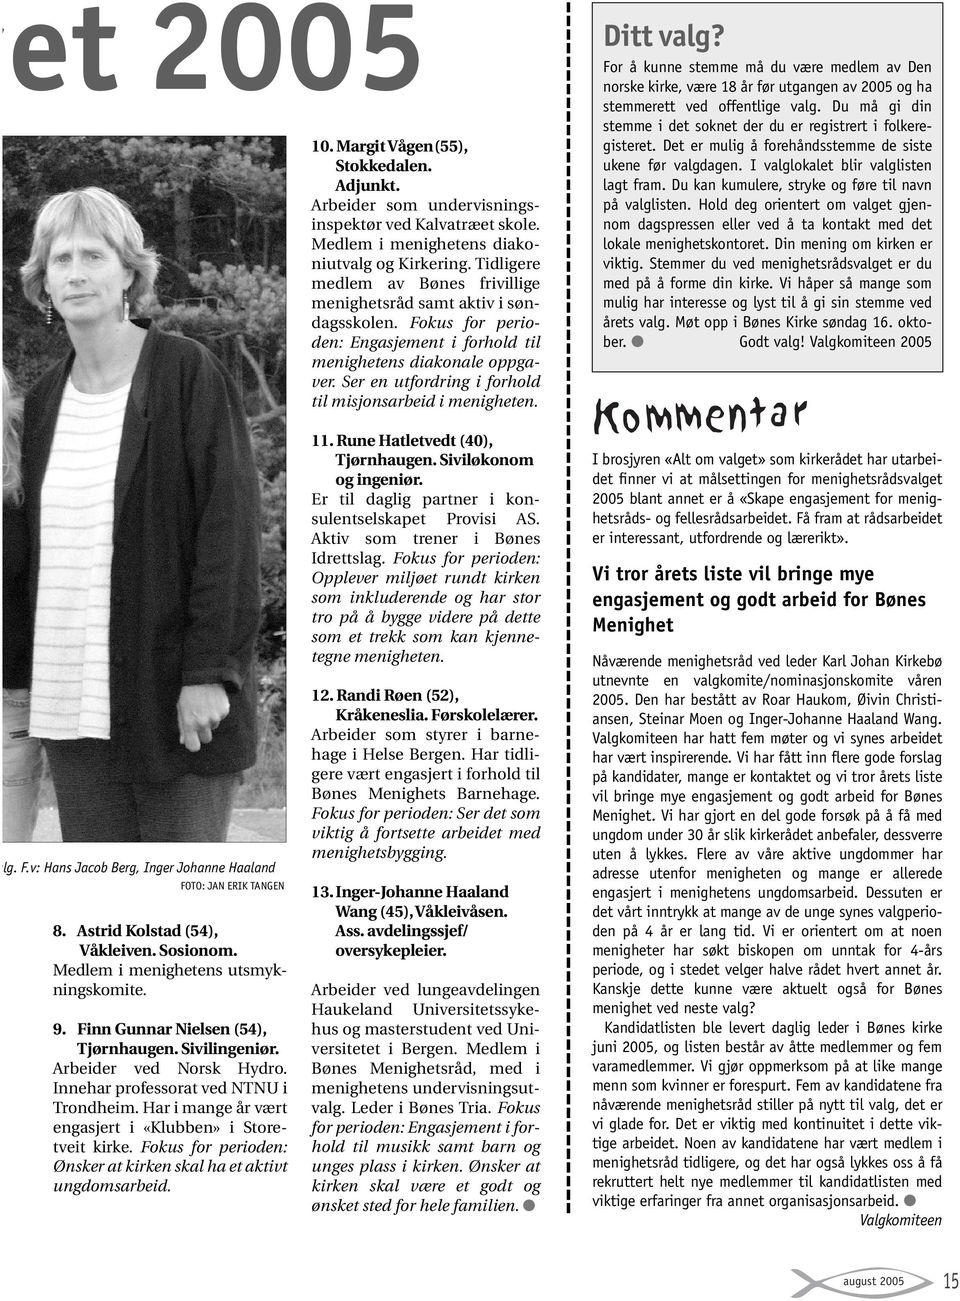 Fokus for perioden: Ønsker at kirken skal ha et aktivt ungdomsarbeid. 10. Margit Vågen(55), Stokkedalen. Adjunkt. Arbeider som undervisningsinspektør ved Kalvatræet skole.